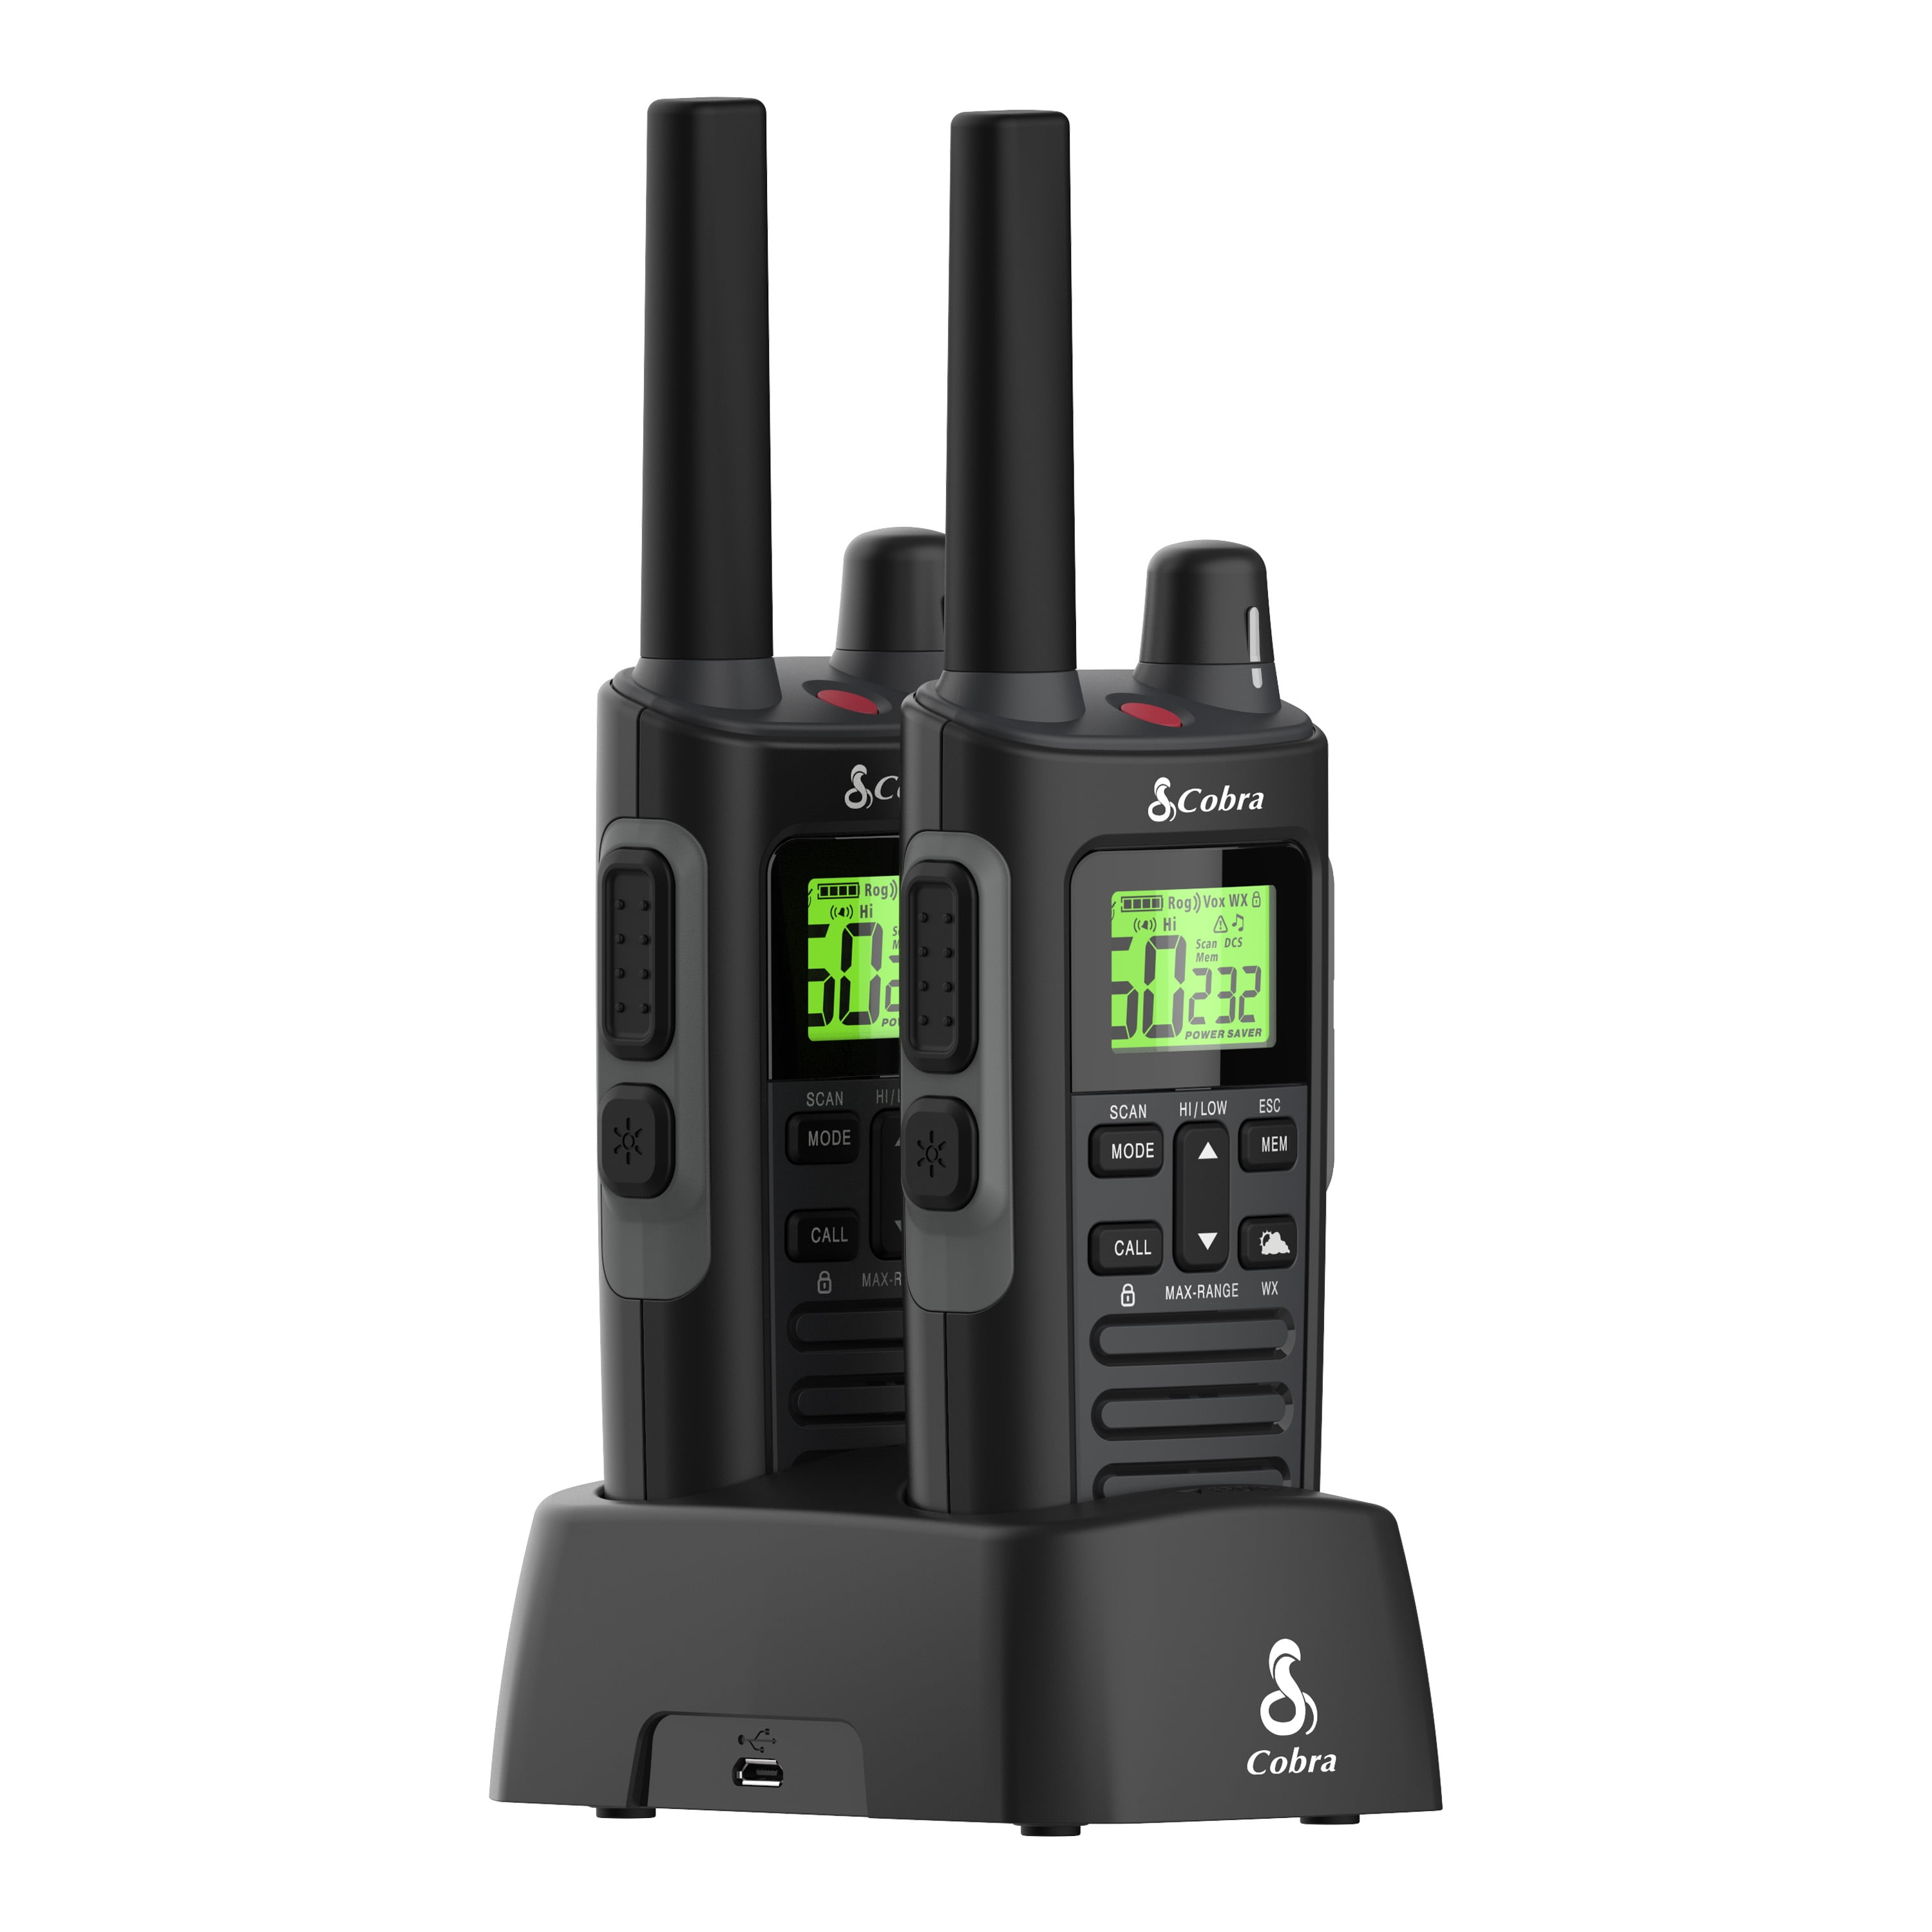 Cobra RX685 Walkie Talkies Two-Way Radios (Pair), 40-mile Range and 60  Channels with 121 Privacy Codes - IP54 Waterproof & NOAA Weather Alerts 